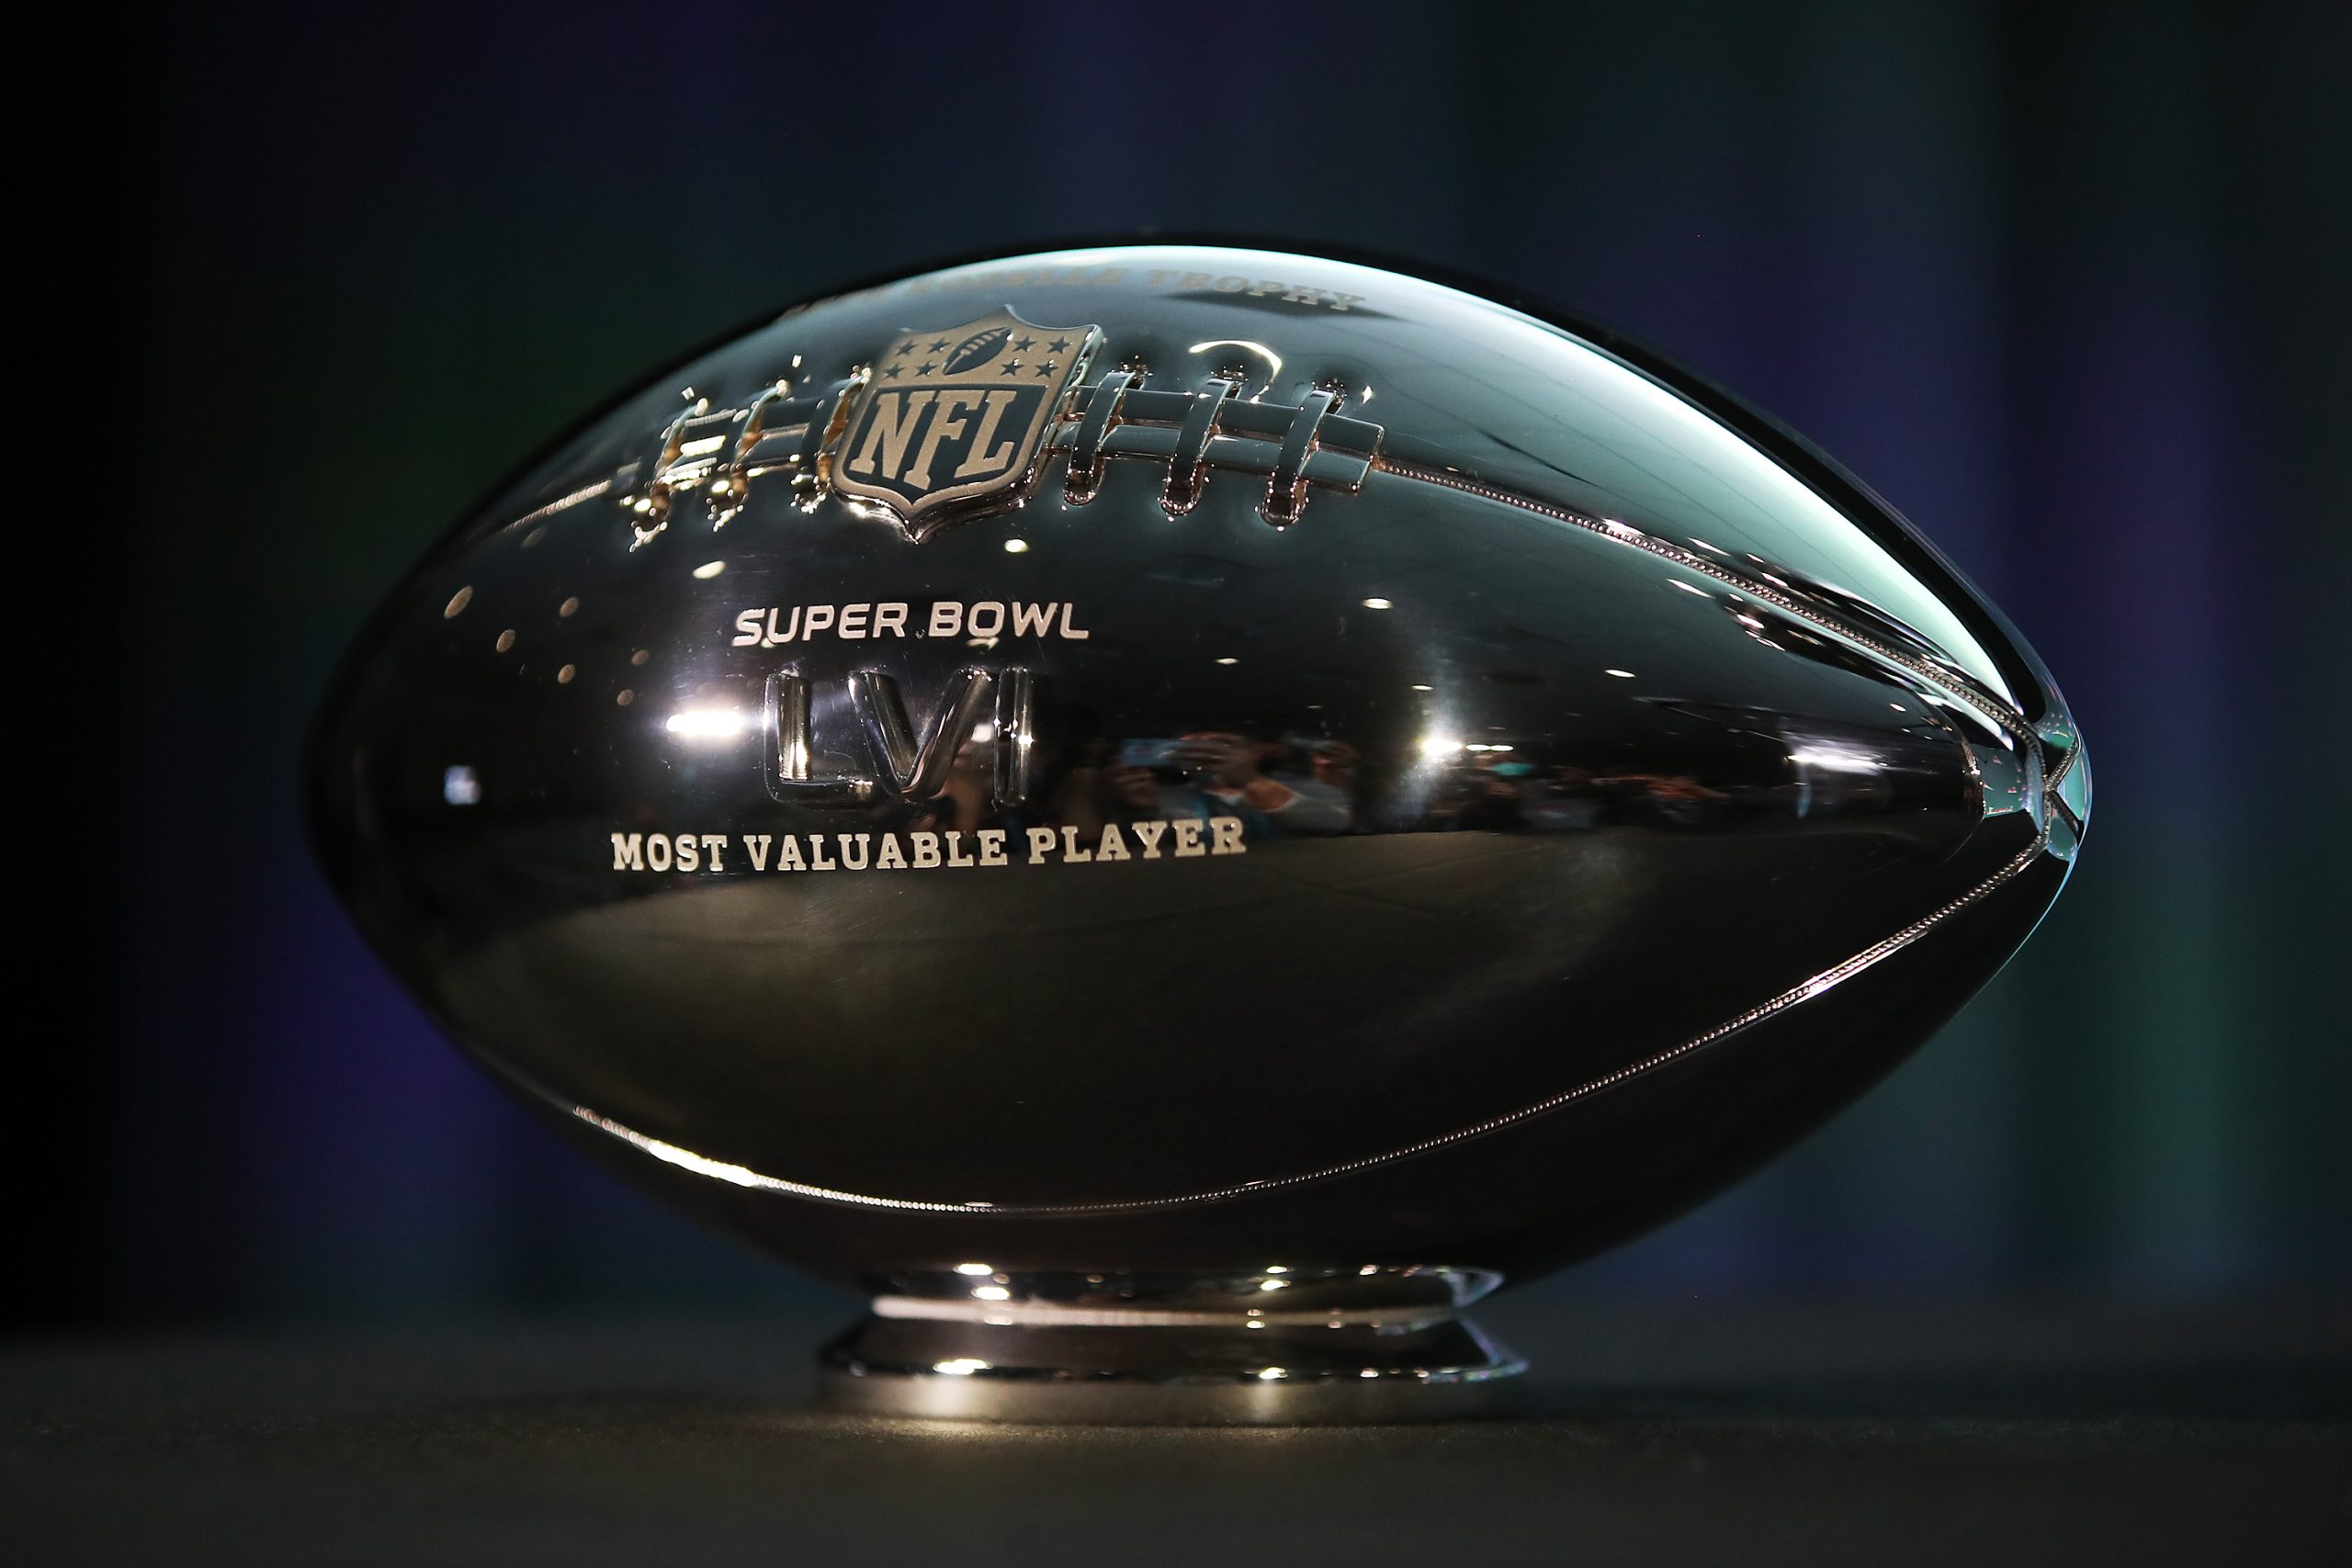 Super Bowl MVP award